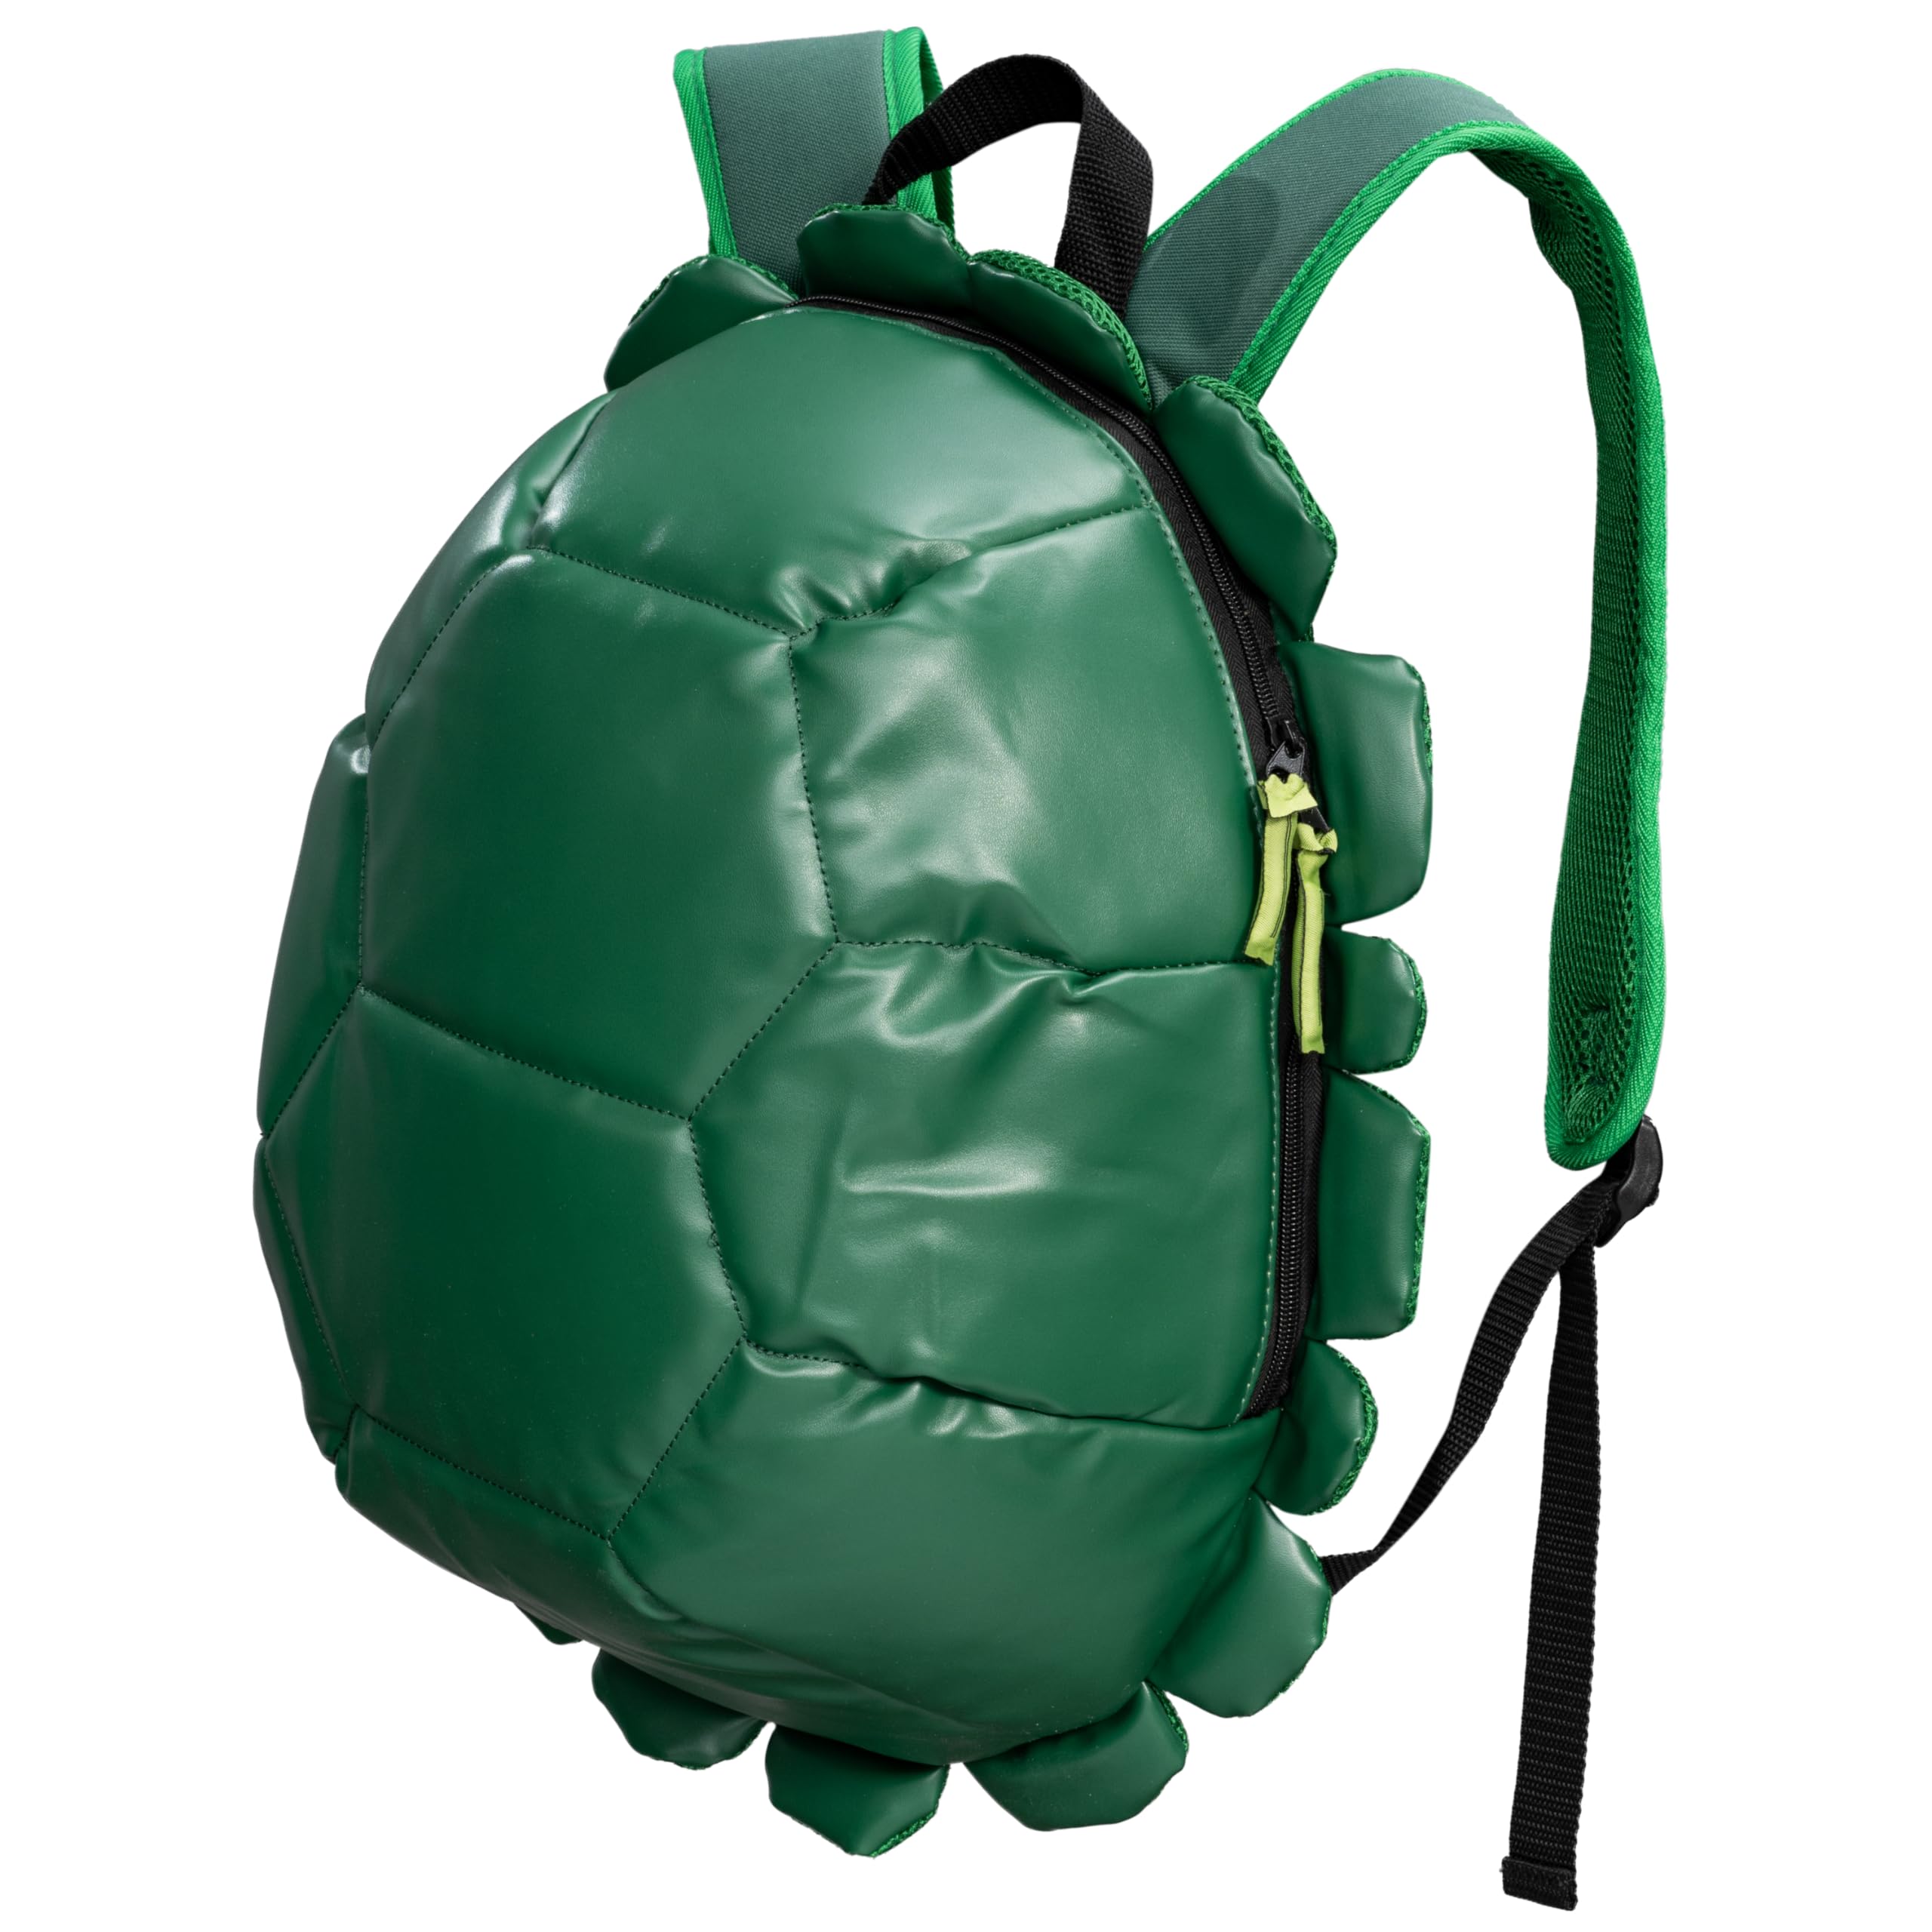 Super Hero Turtle Shell Backpack with 4 Ninja Masks Halloween Costume Cosplay